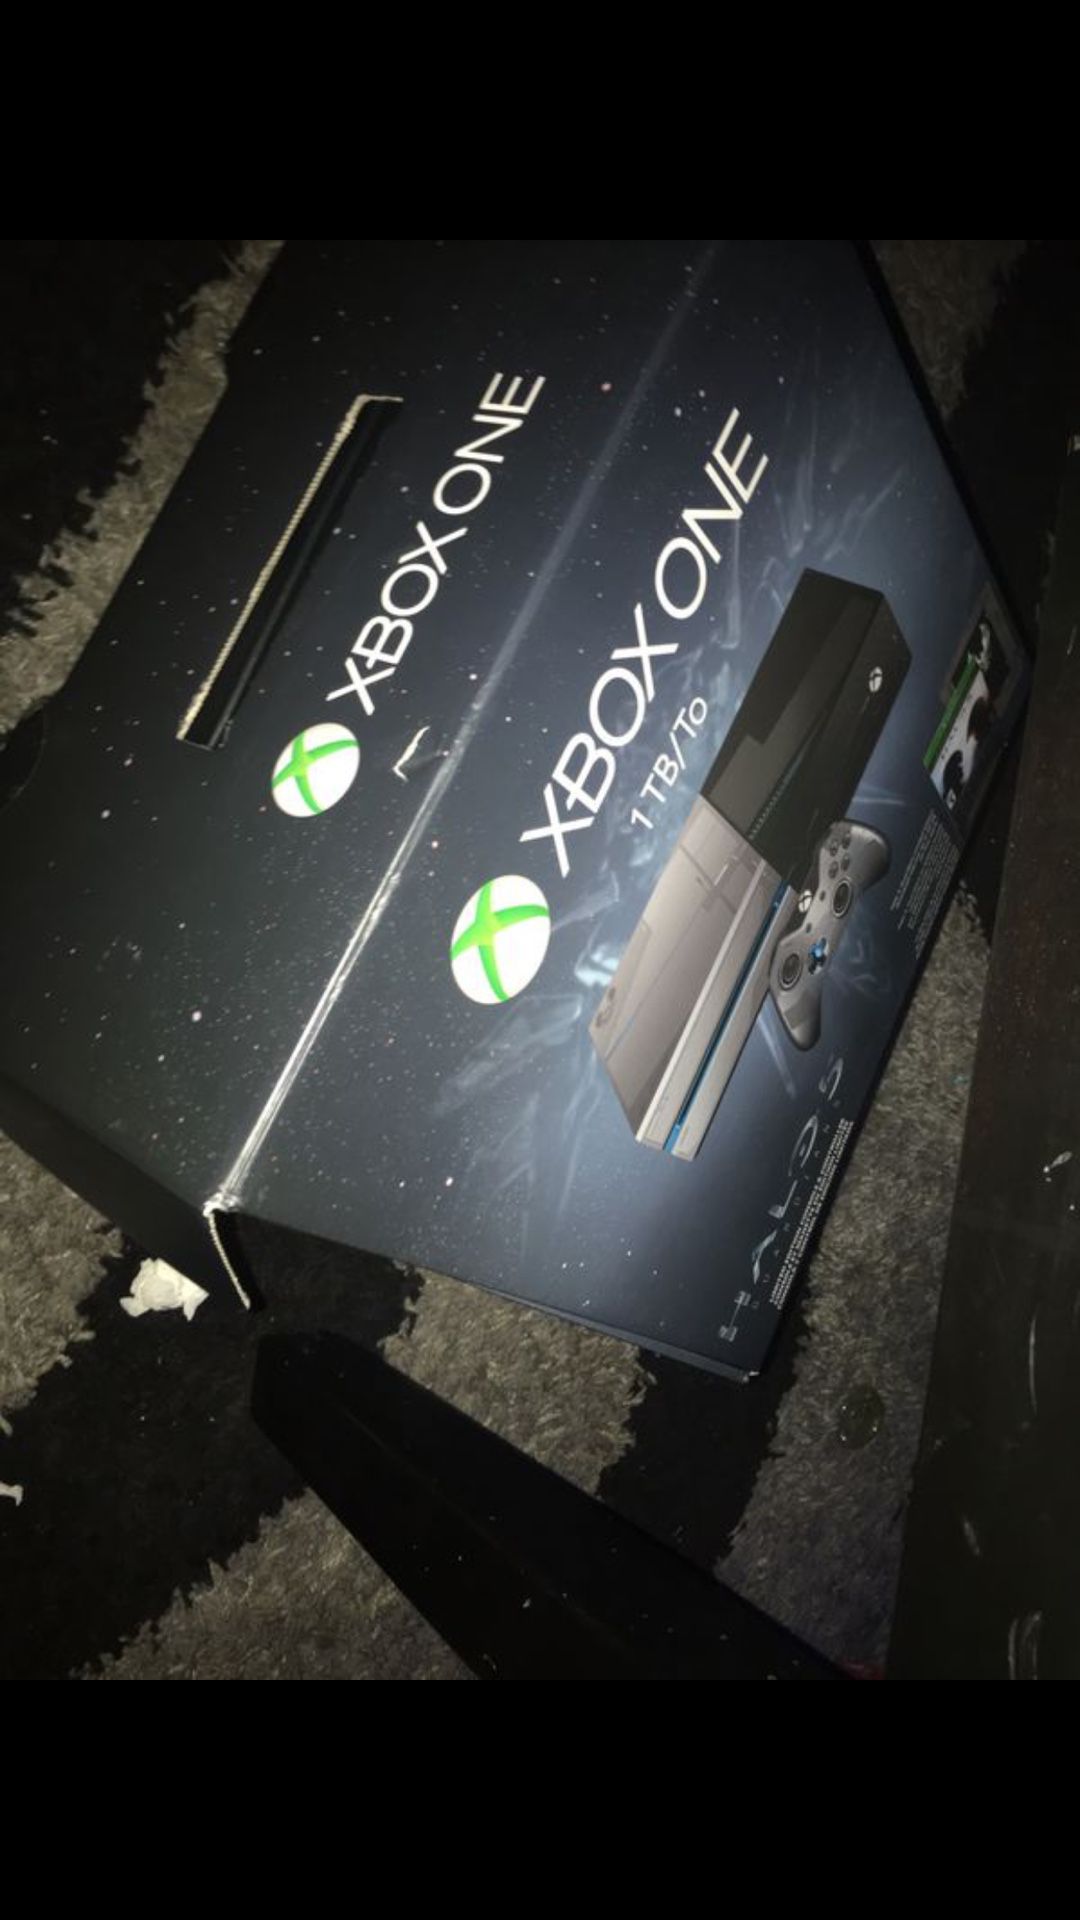 Xbox one Halo Edition